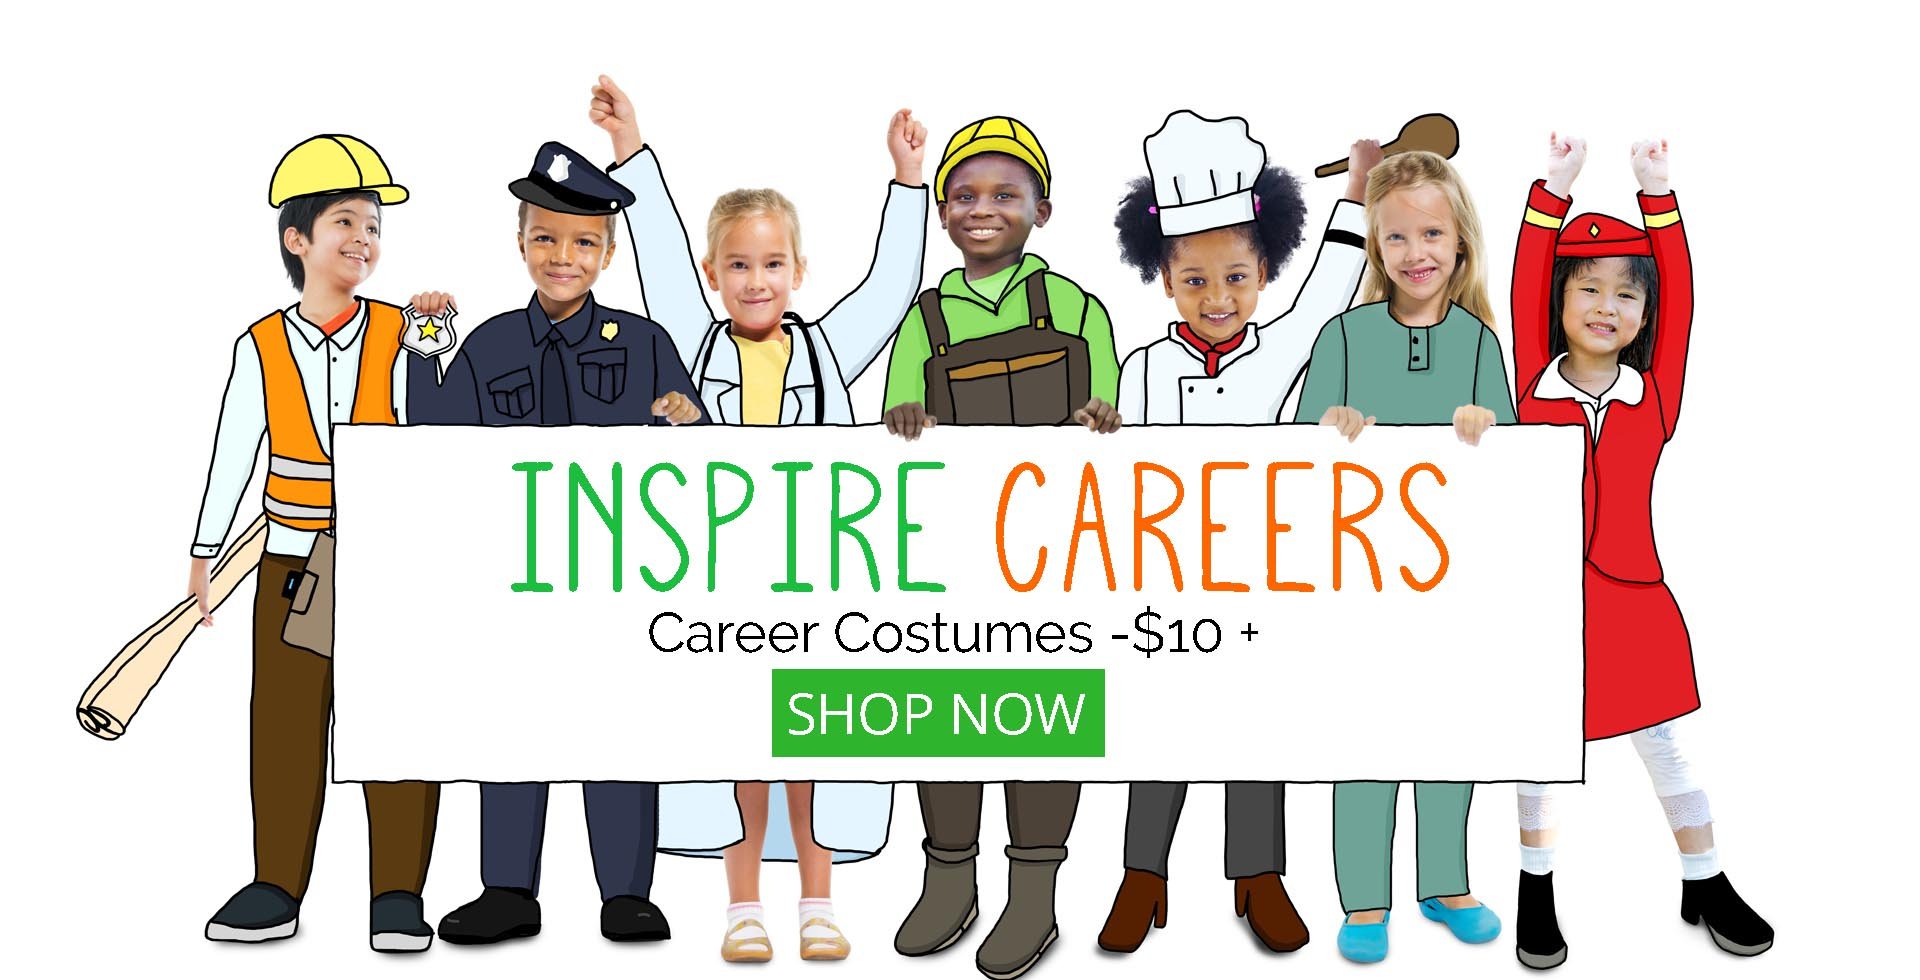 Dress Up Career Job Costumes at Costume Zoo